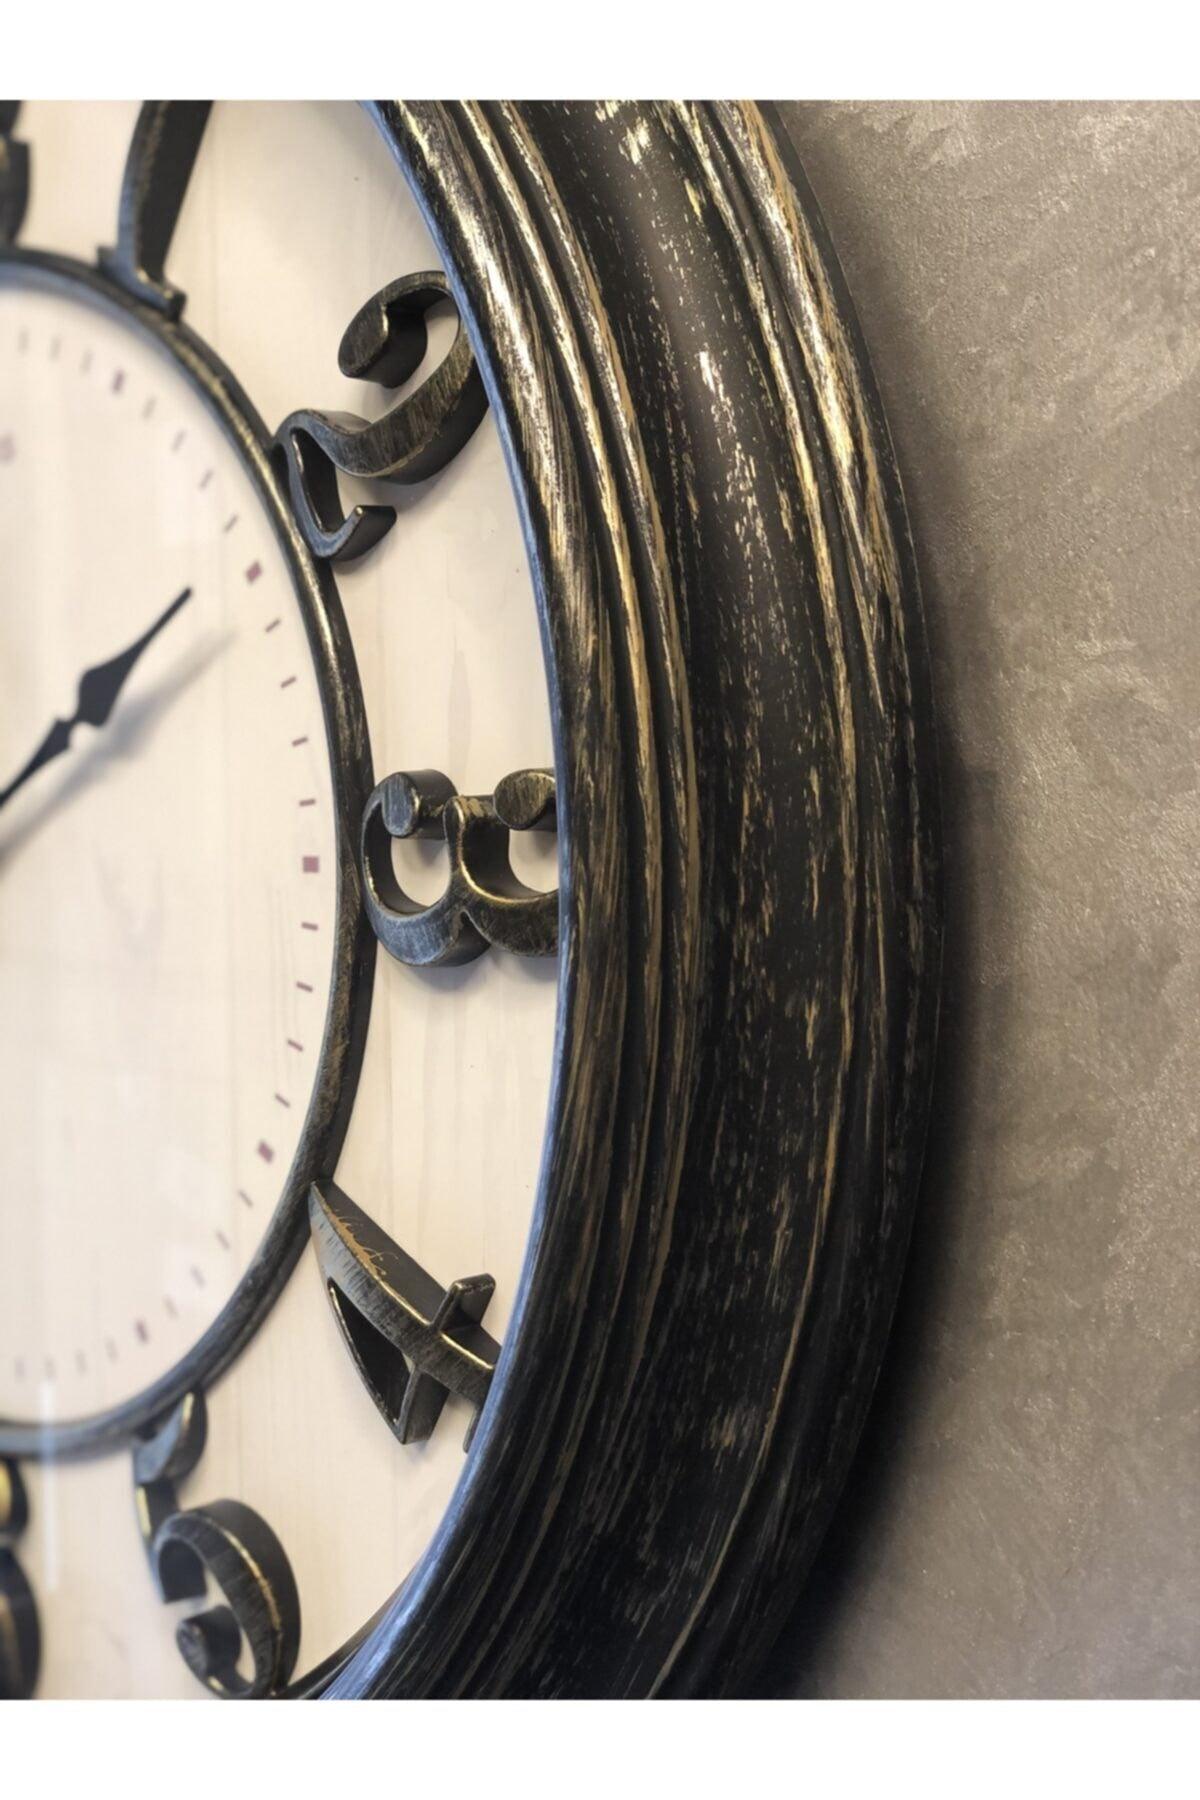 Akar Saniye Silent Mechanism Decorative Wall Clock 46 Cm - Swordslife